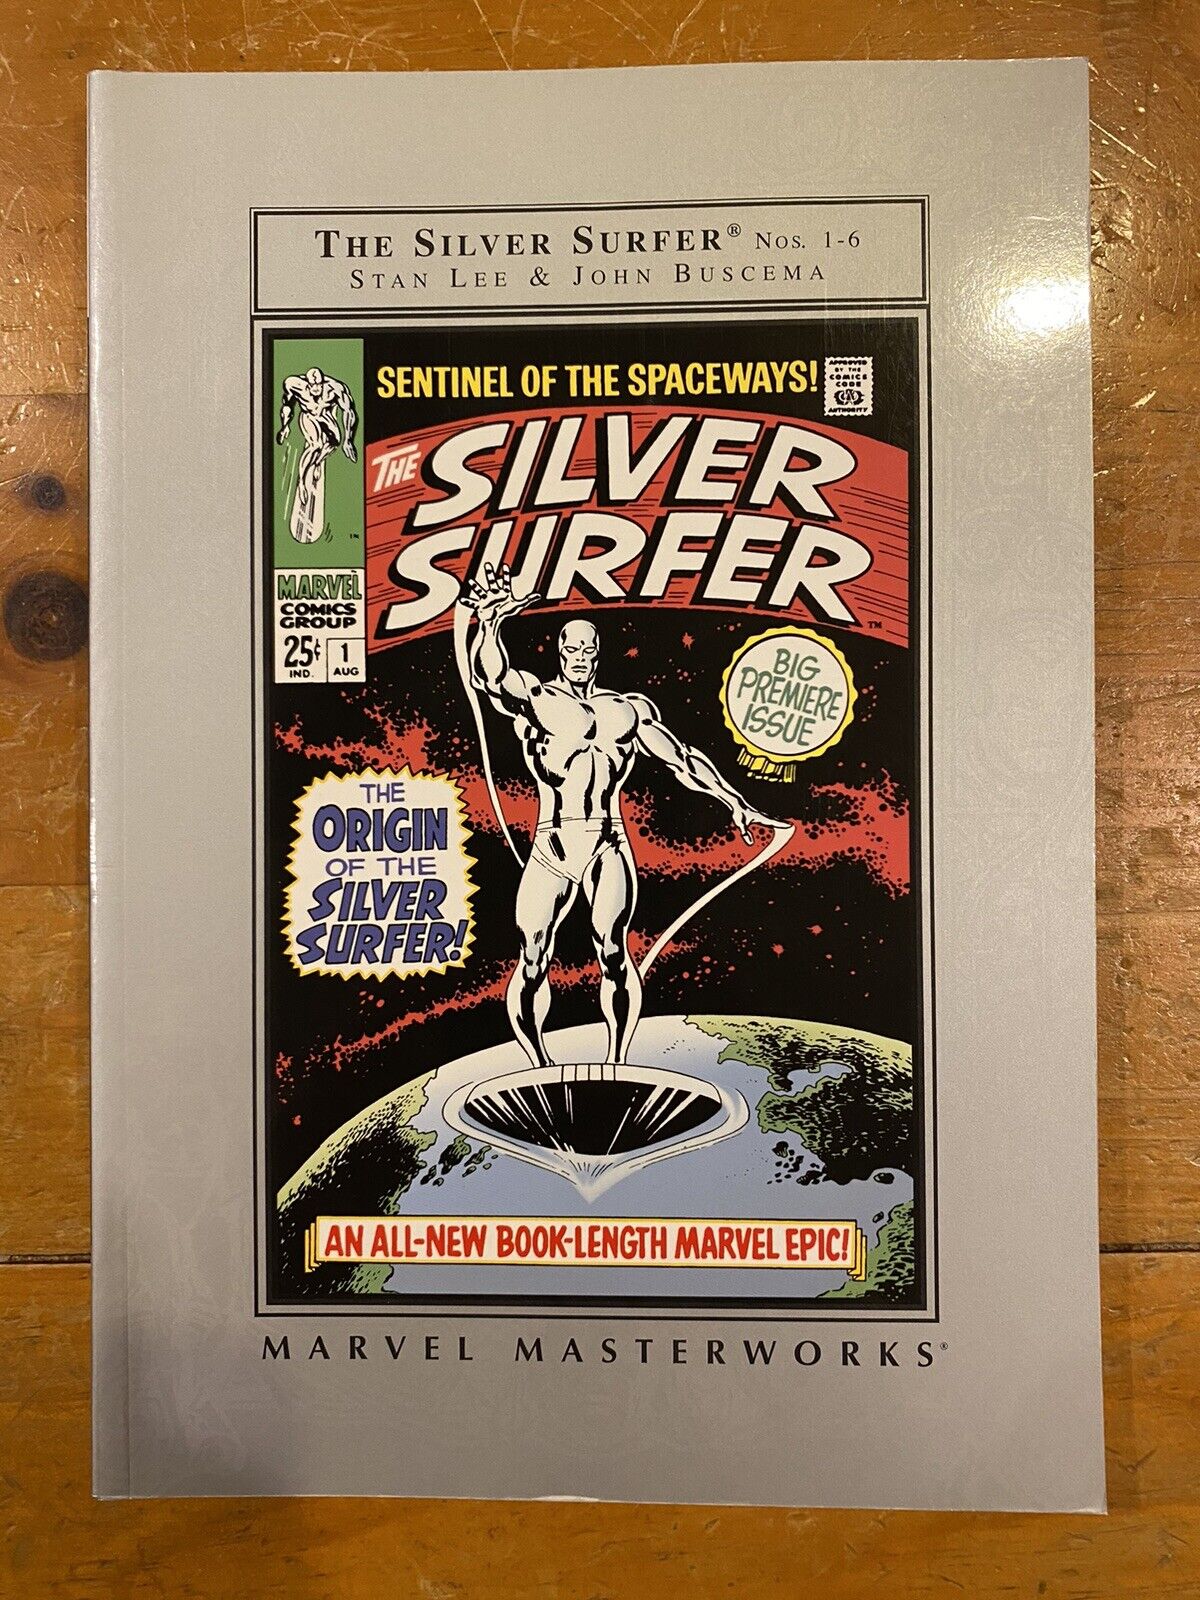 Marvel Masterworks: The Silver Surfer Vol 1 - Barnes & Noble Edition (Marvel)